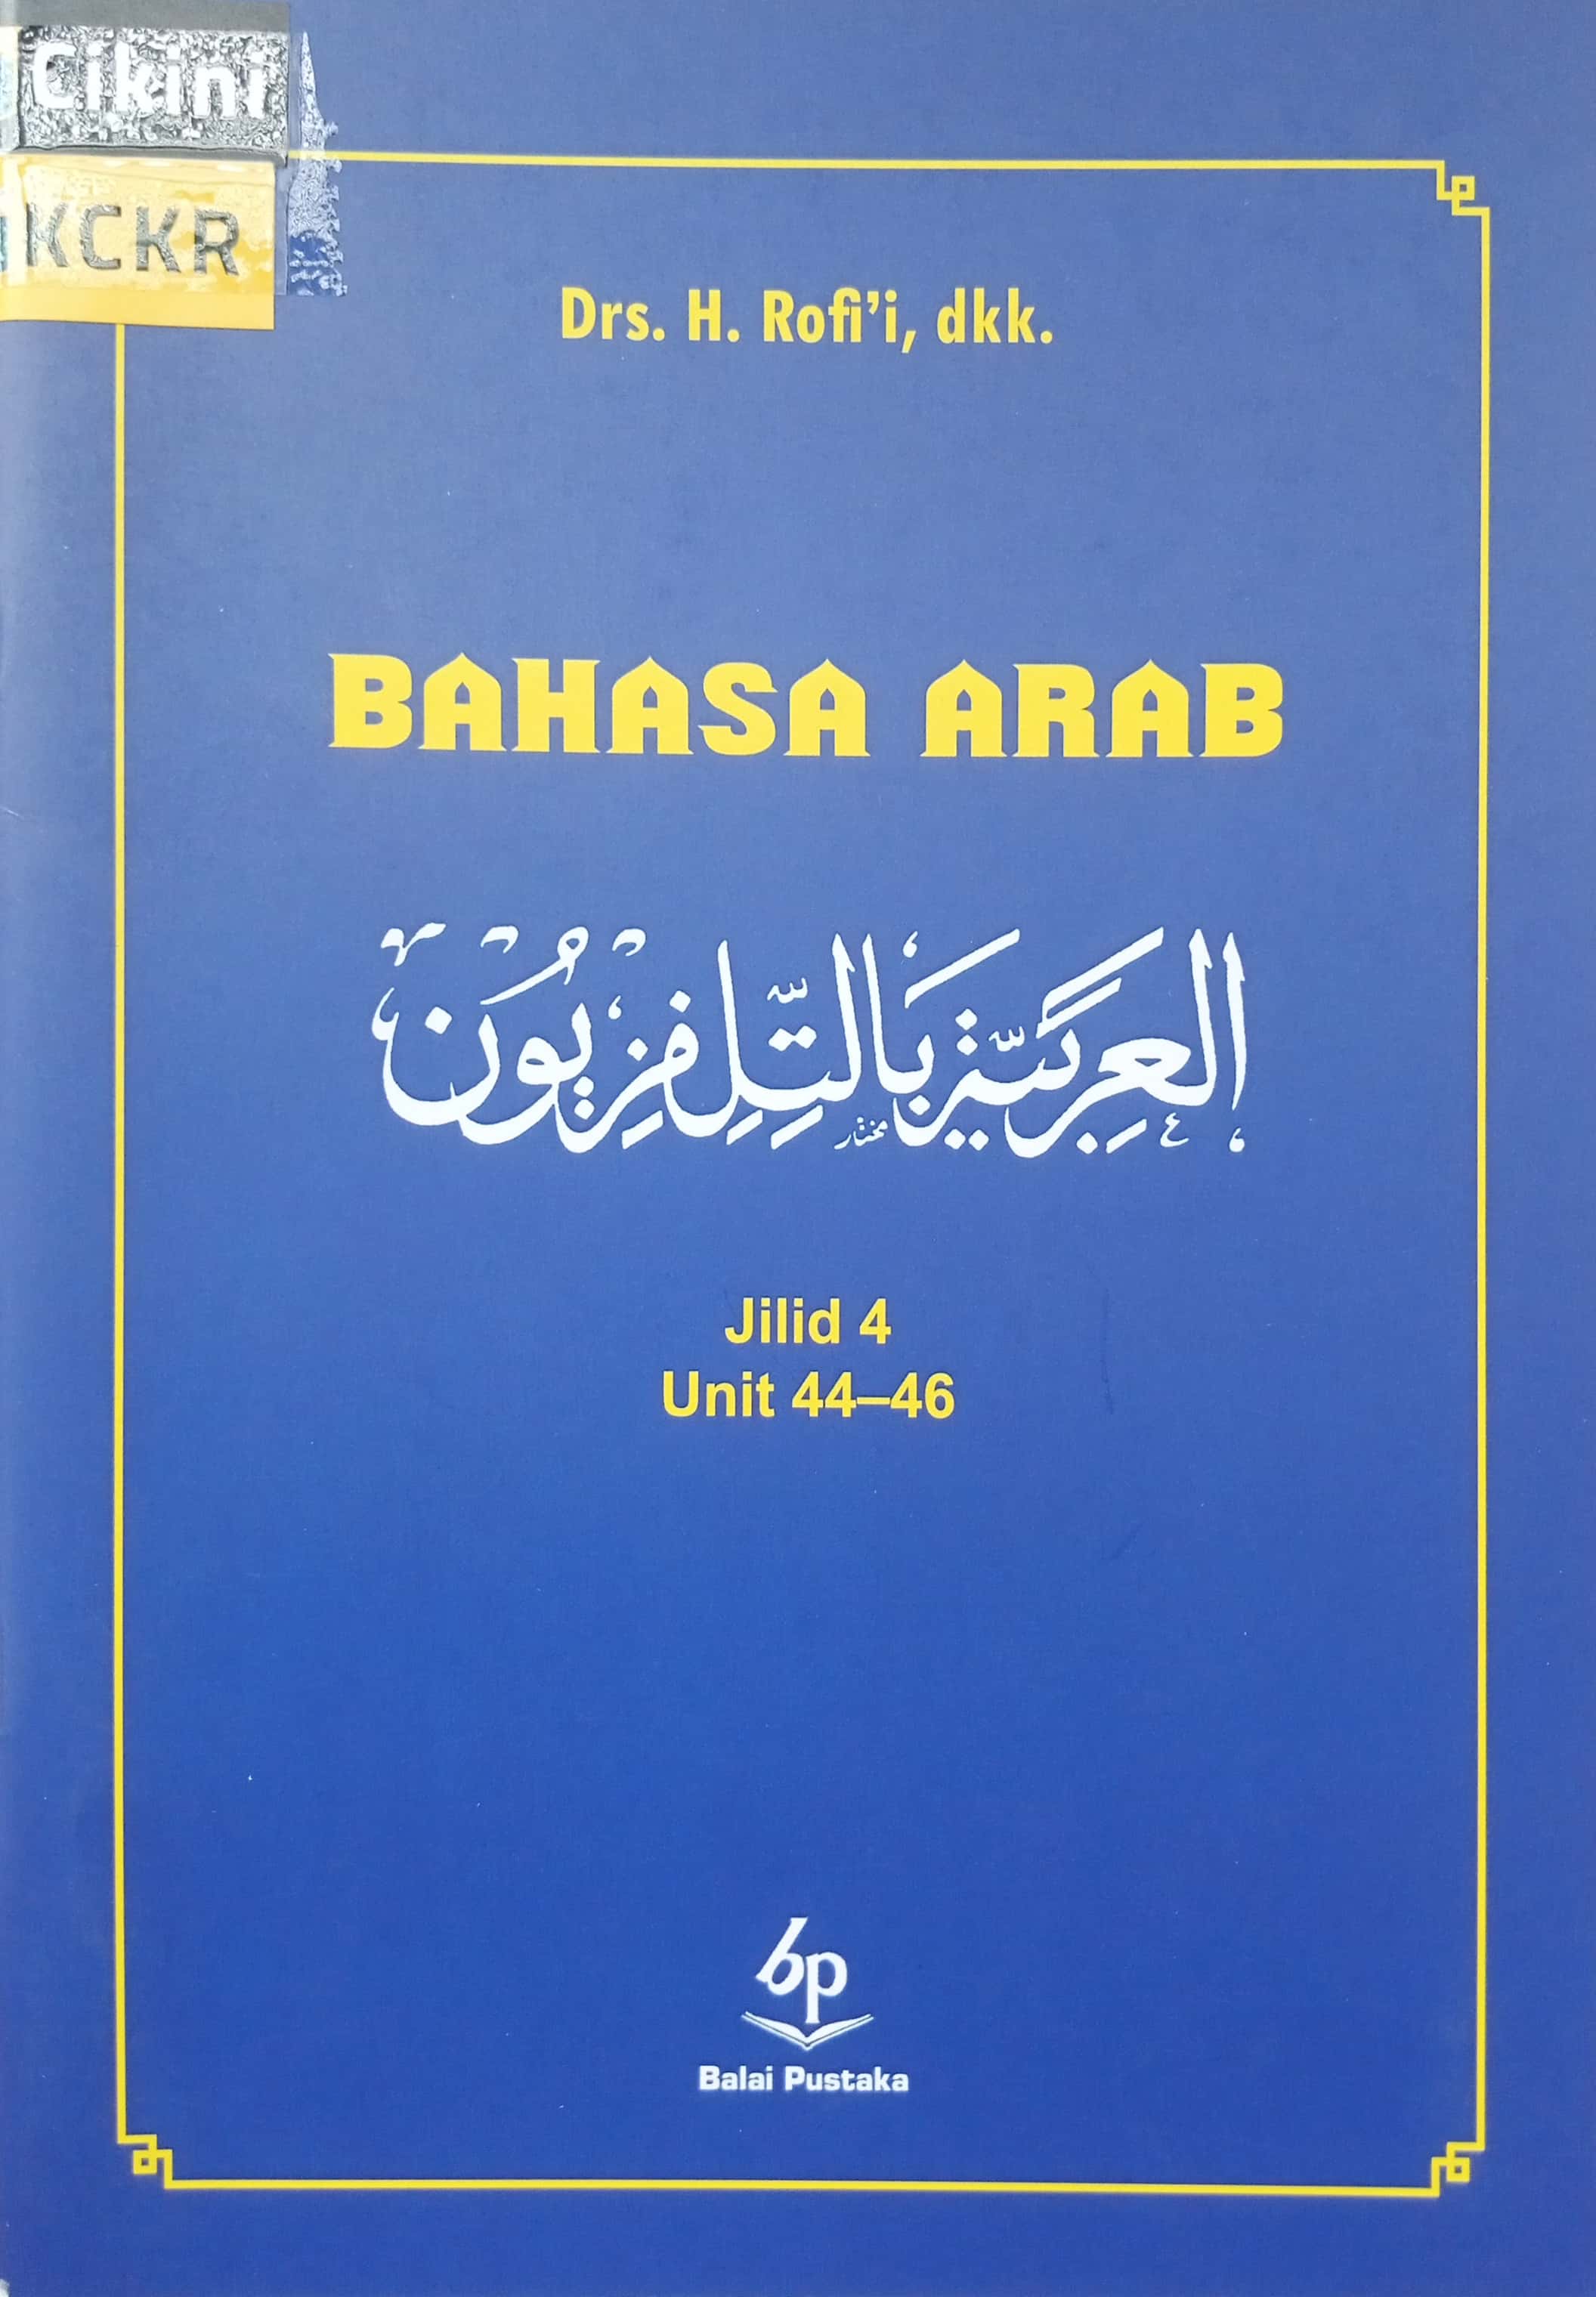 Bahasa Arab jilid 4 unit 44-46